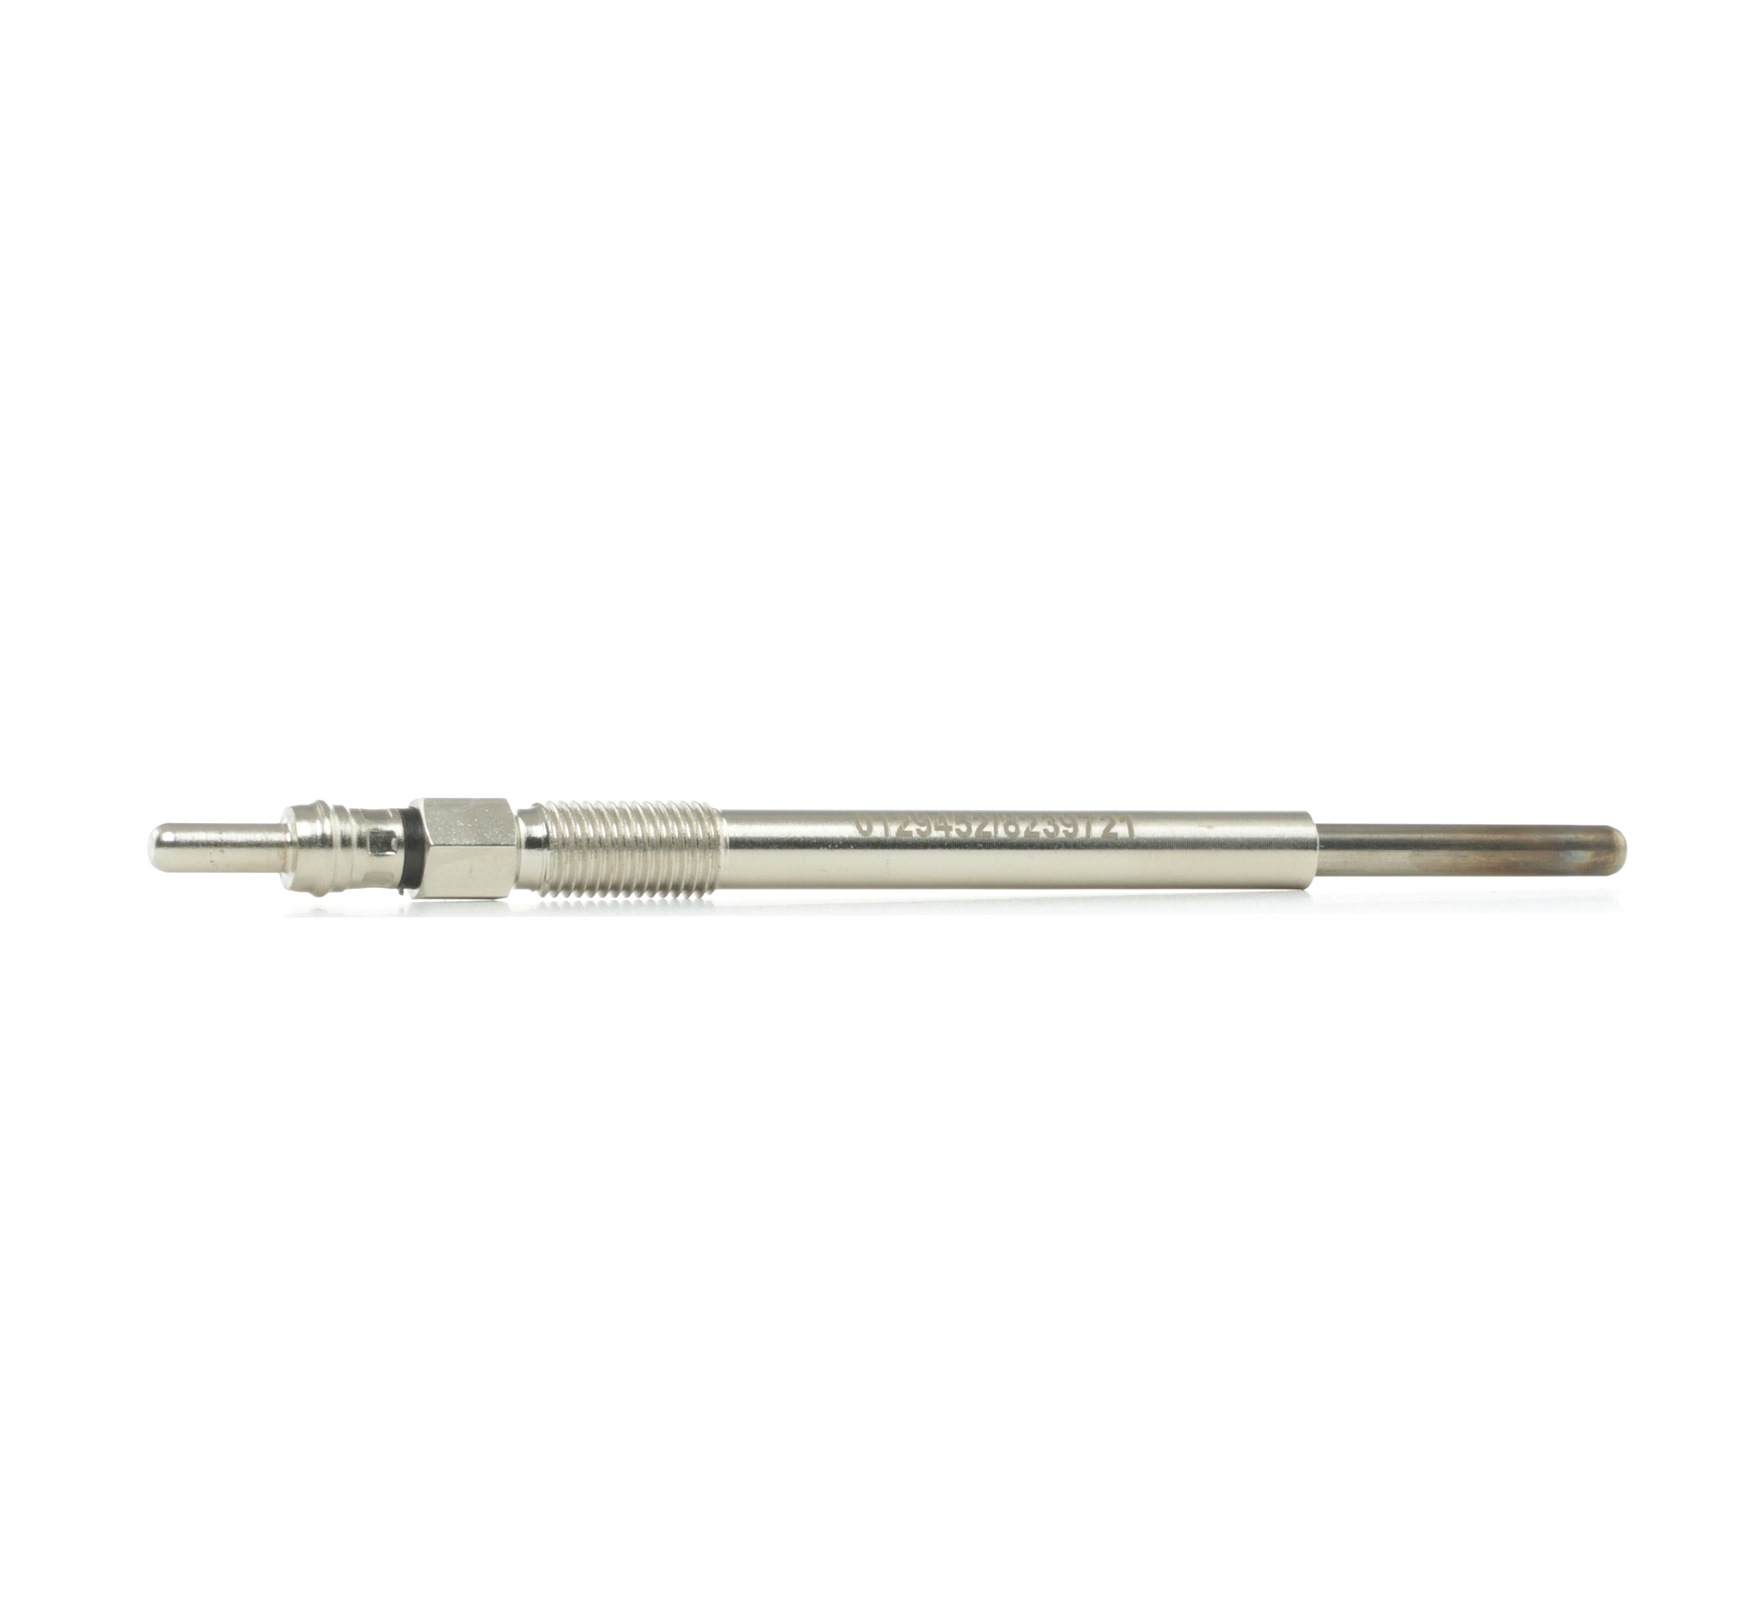 STARK SKGP-1890163 Glow plug 11V M 8 x 1,0, Pencil-type Glow Plug, after-glow capable, Length: 125 mm, 8 Nm, 123